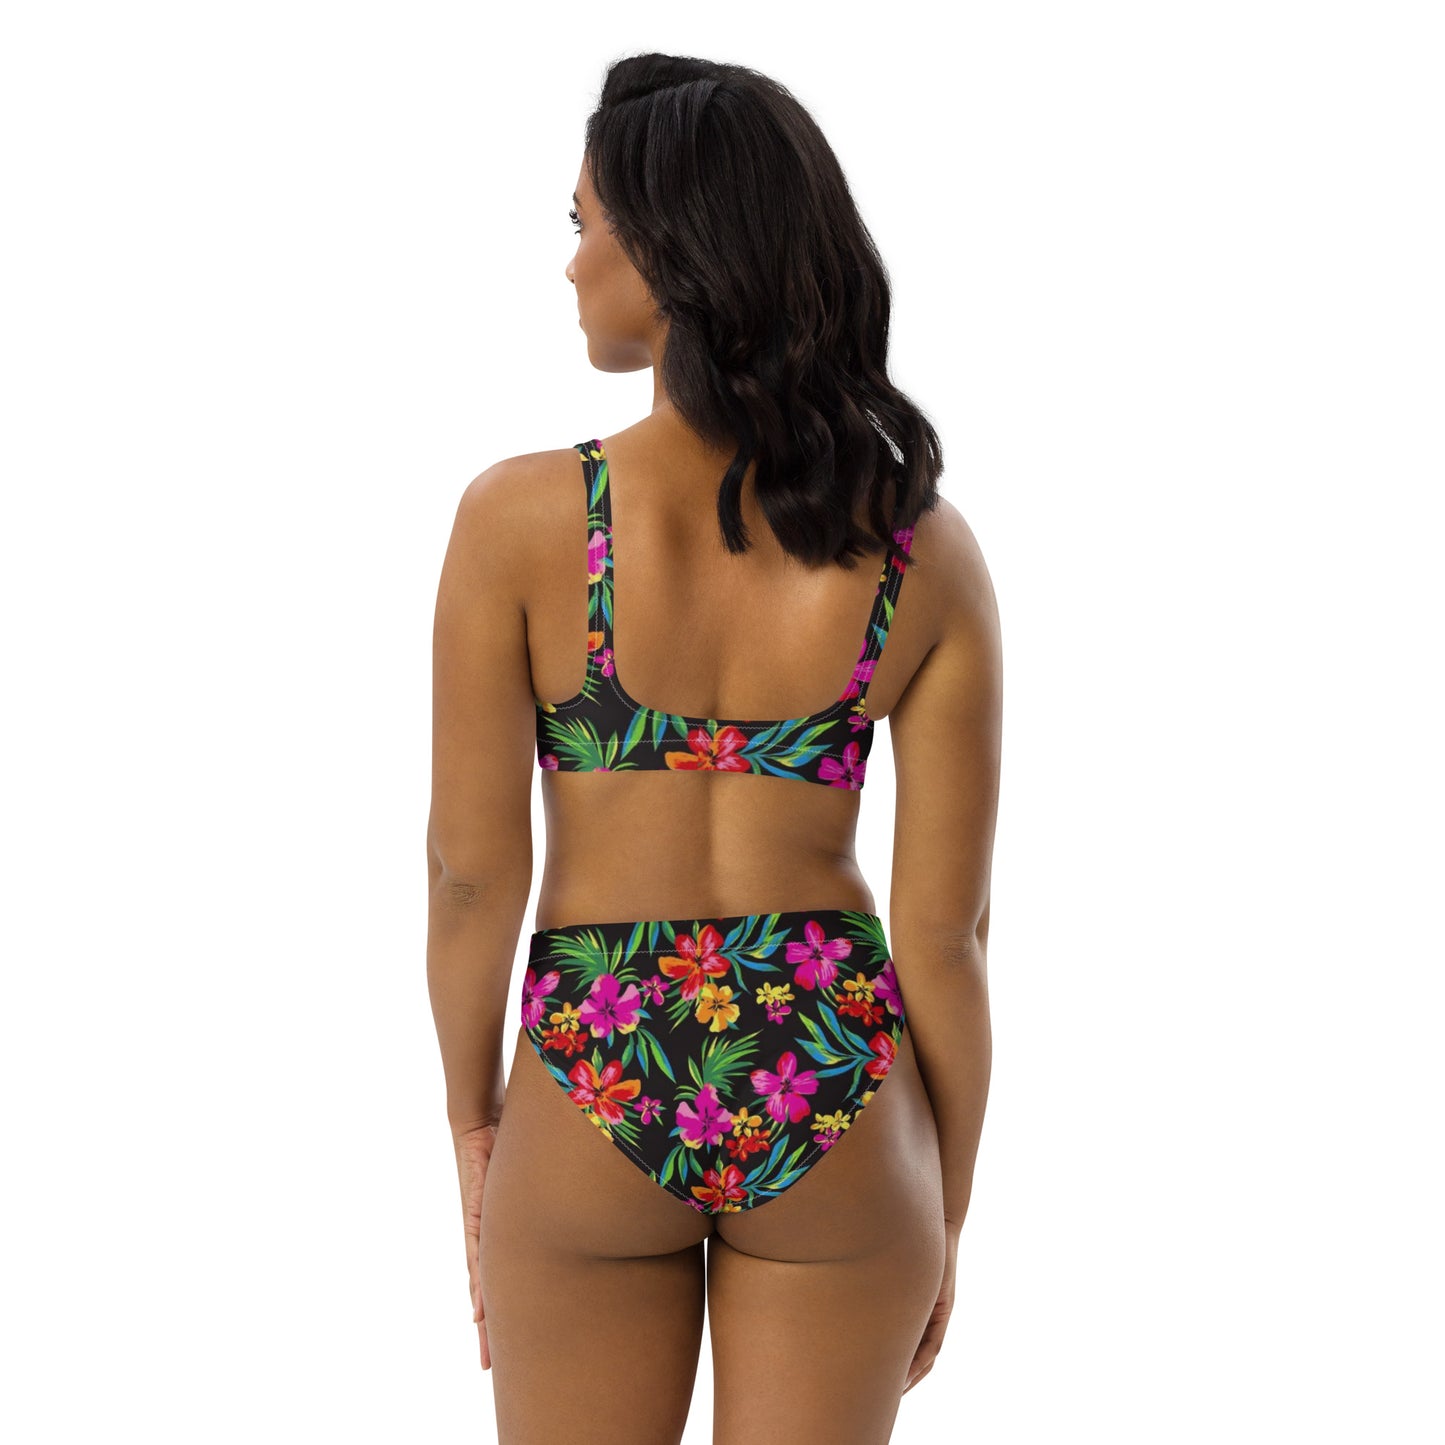 Tropical Floral - Recycled high-waisted bikini